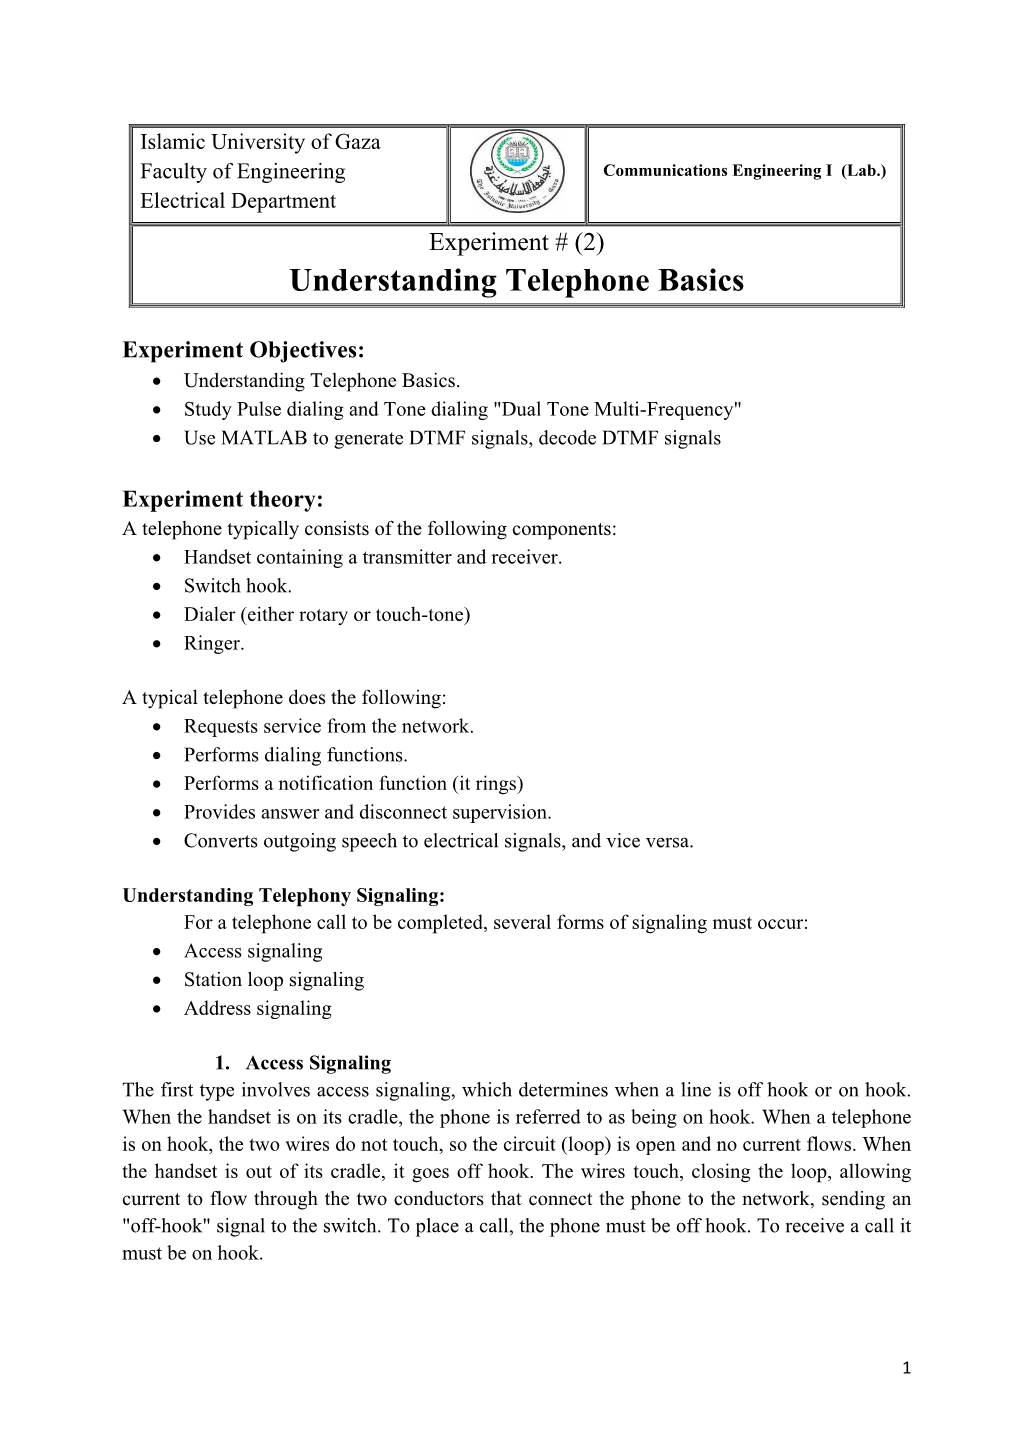 Understanding Telephone Basics